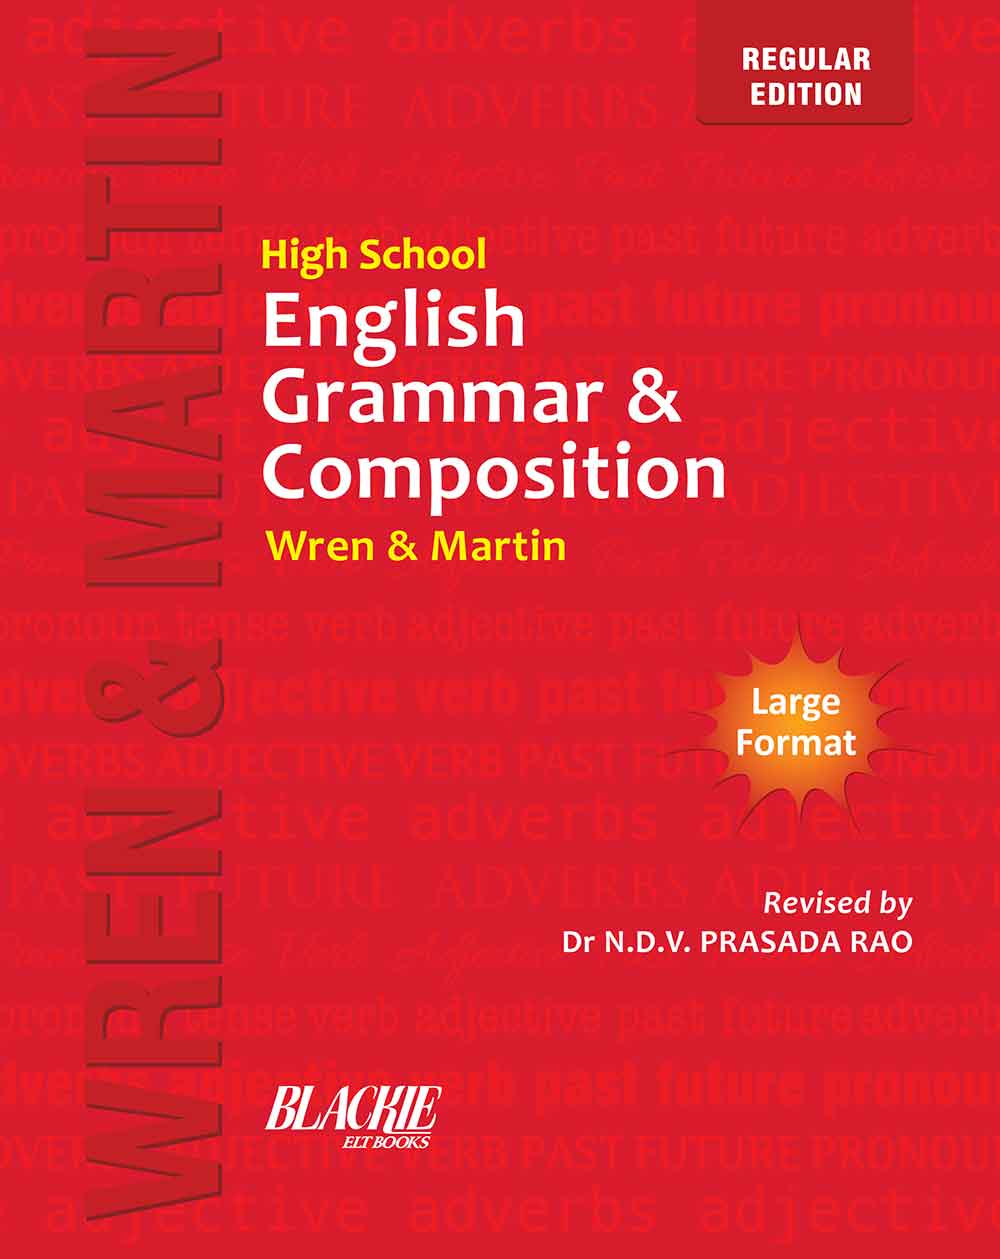 High School English Grammar Regular Edition By Wren Martin